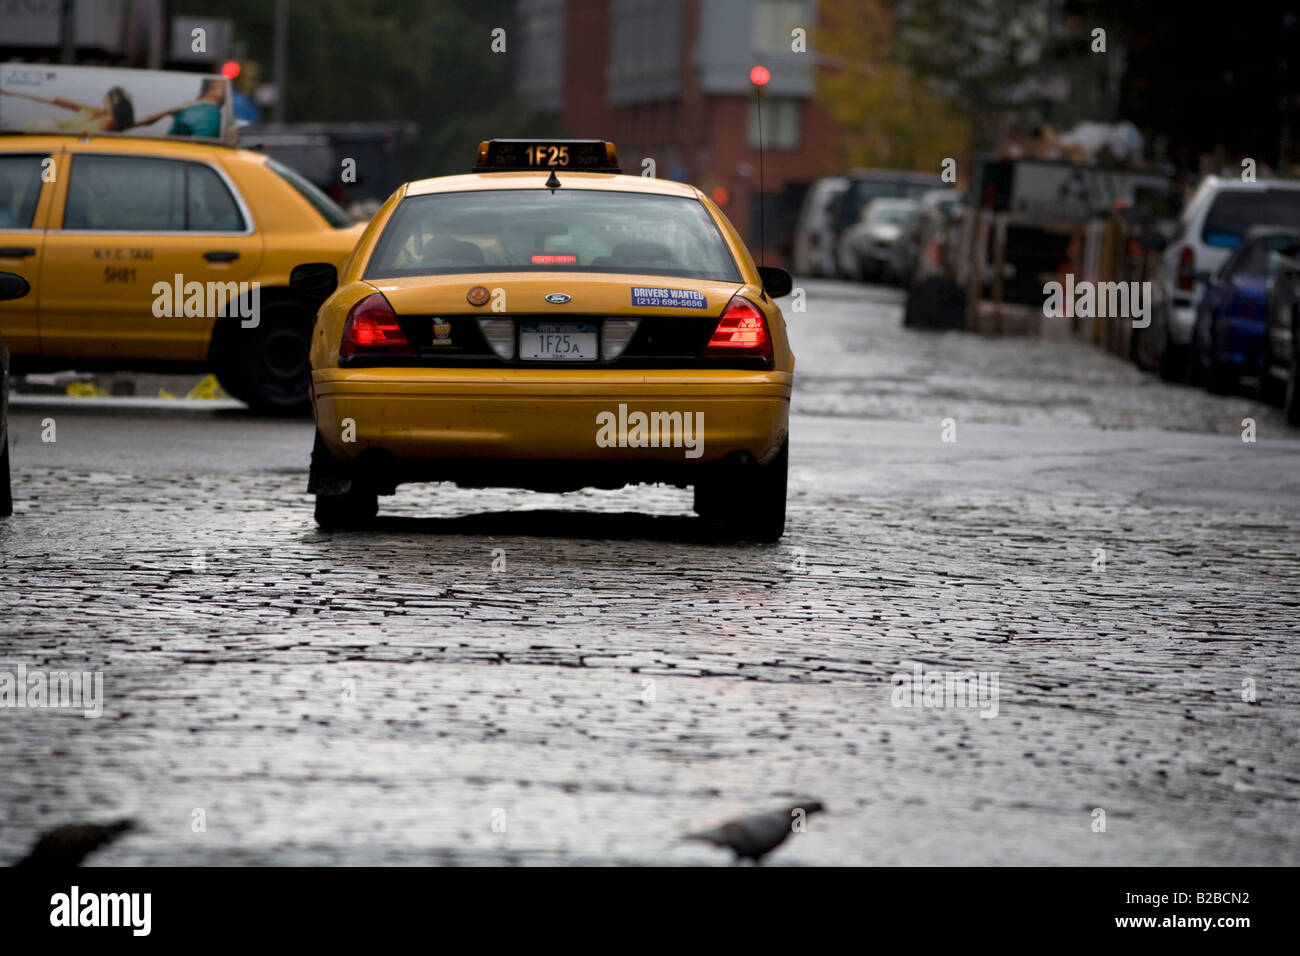 Taxi cabs on Manhattan street Stock Photo